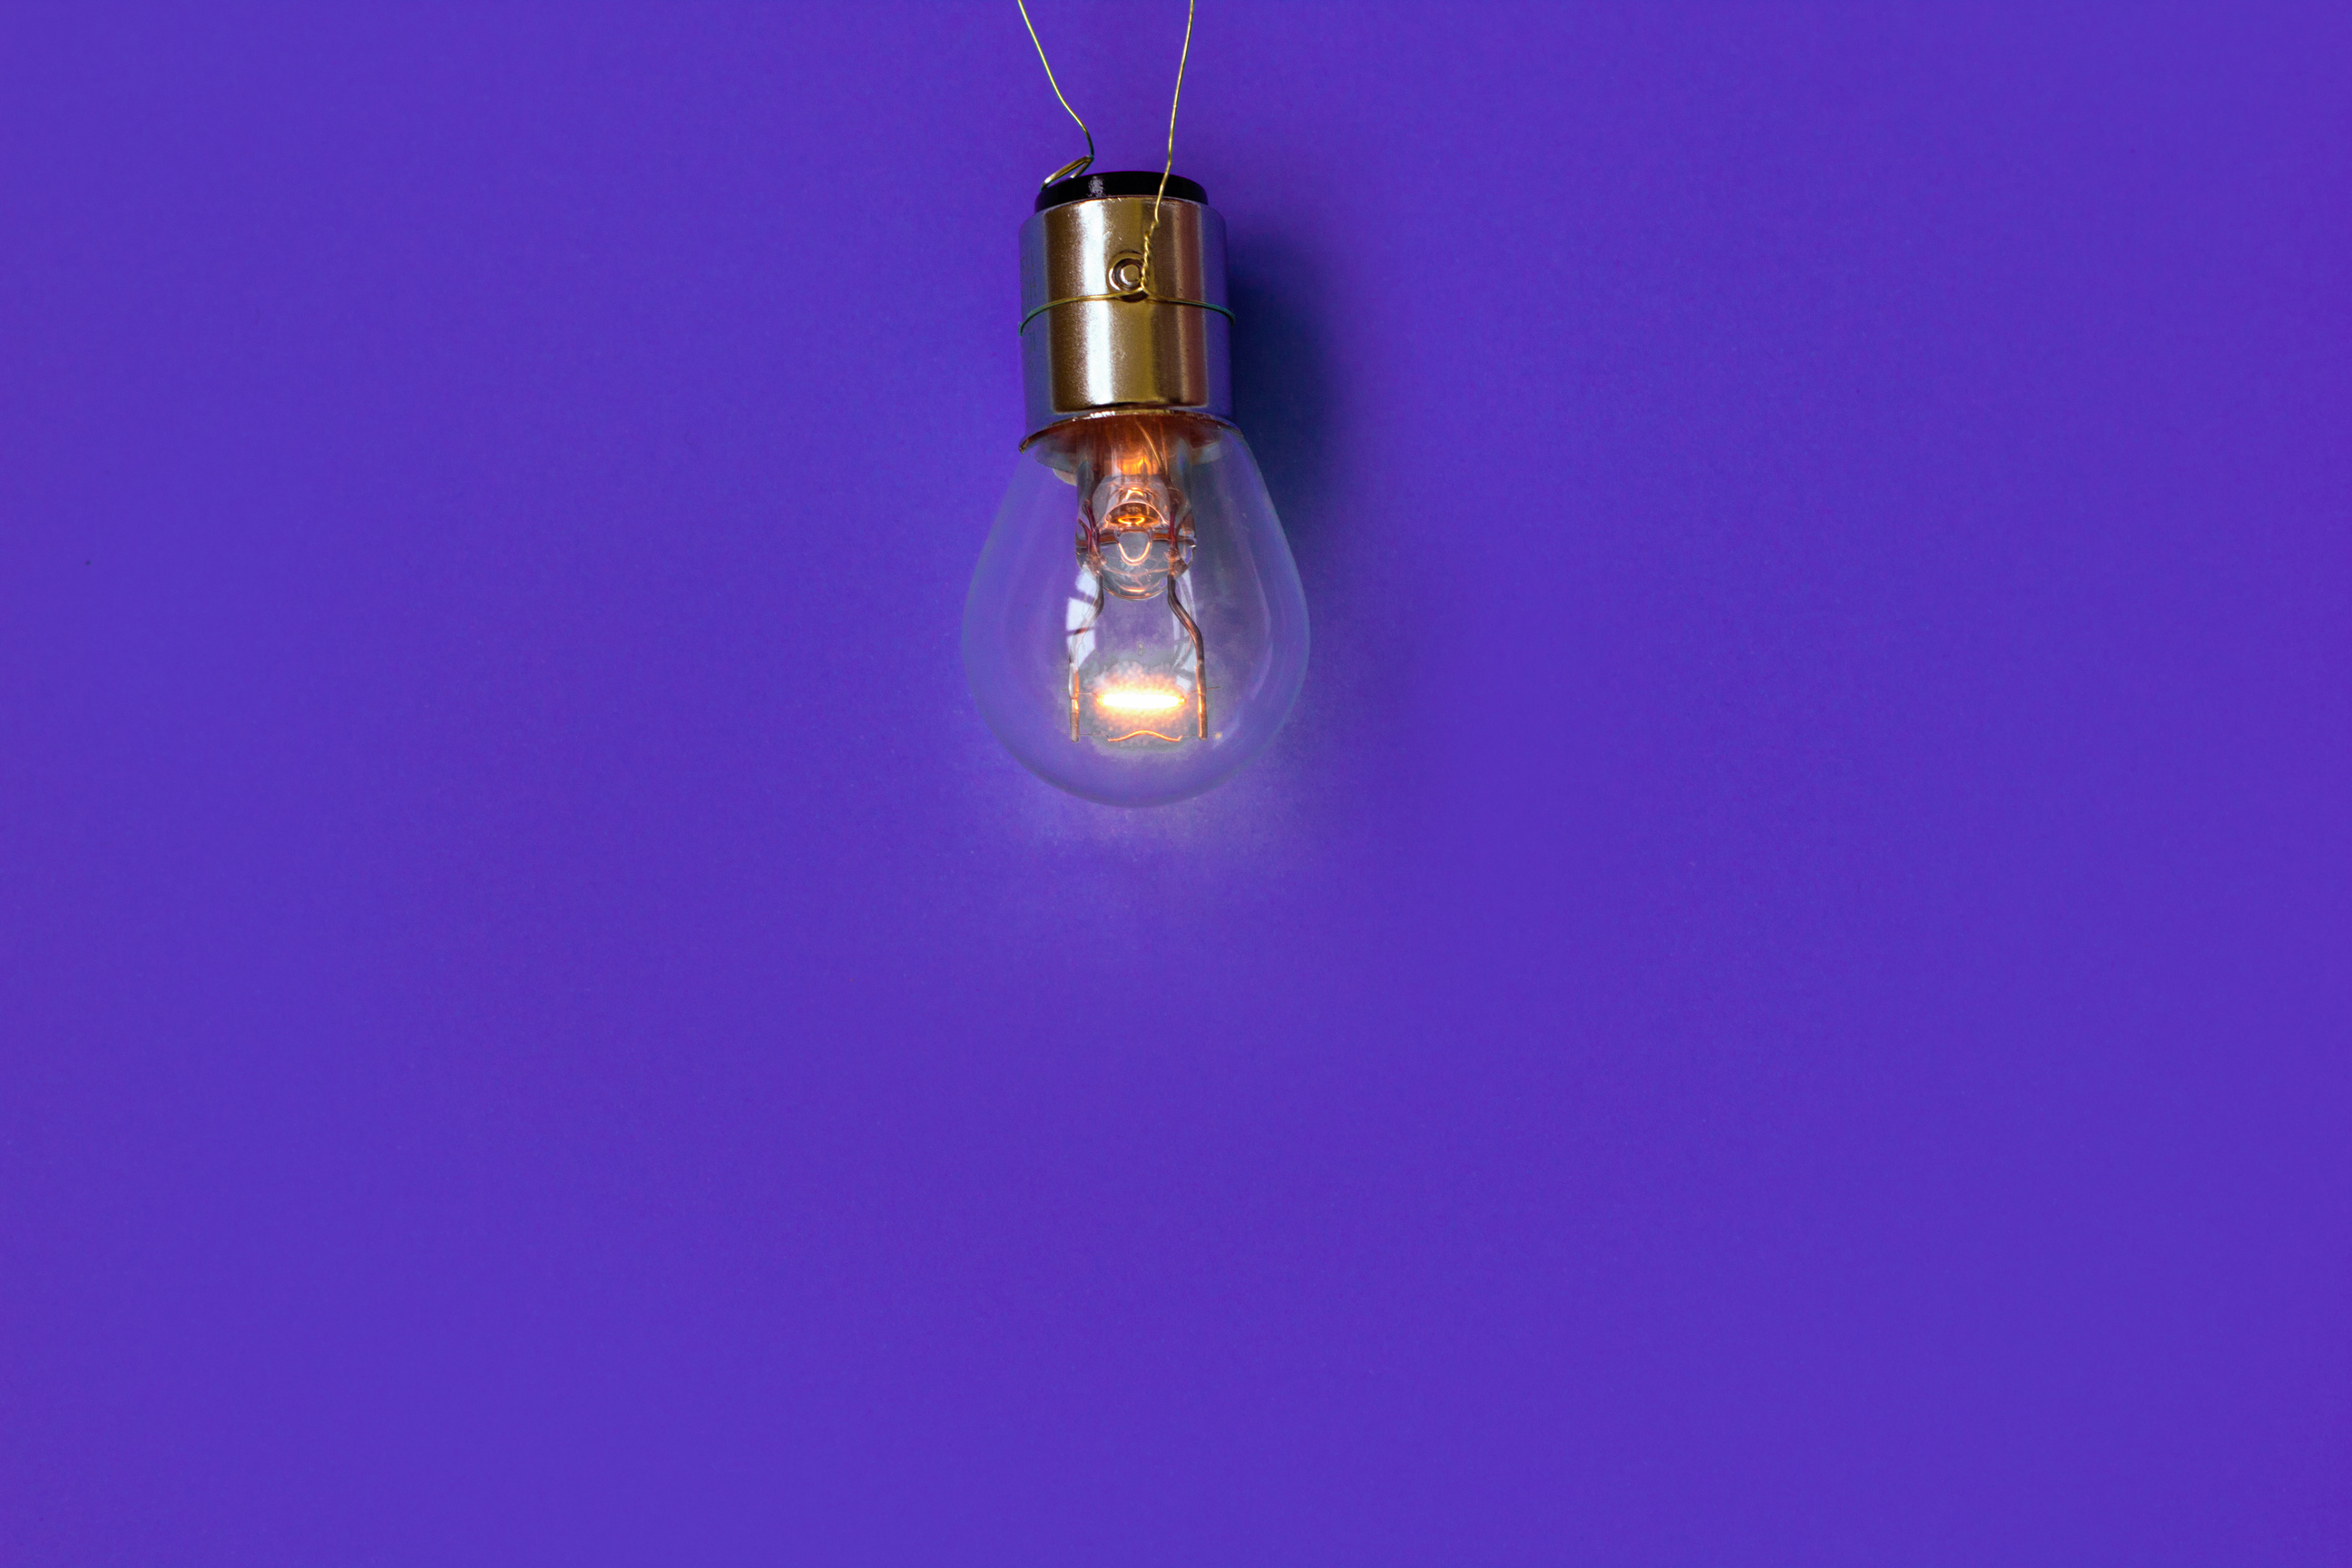 Glowing light bulb on a purple background